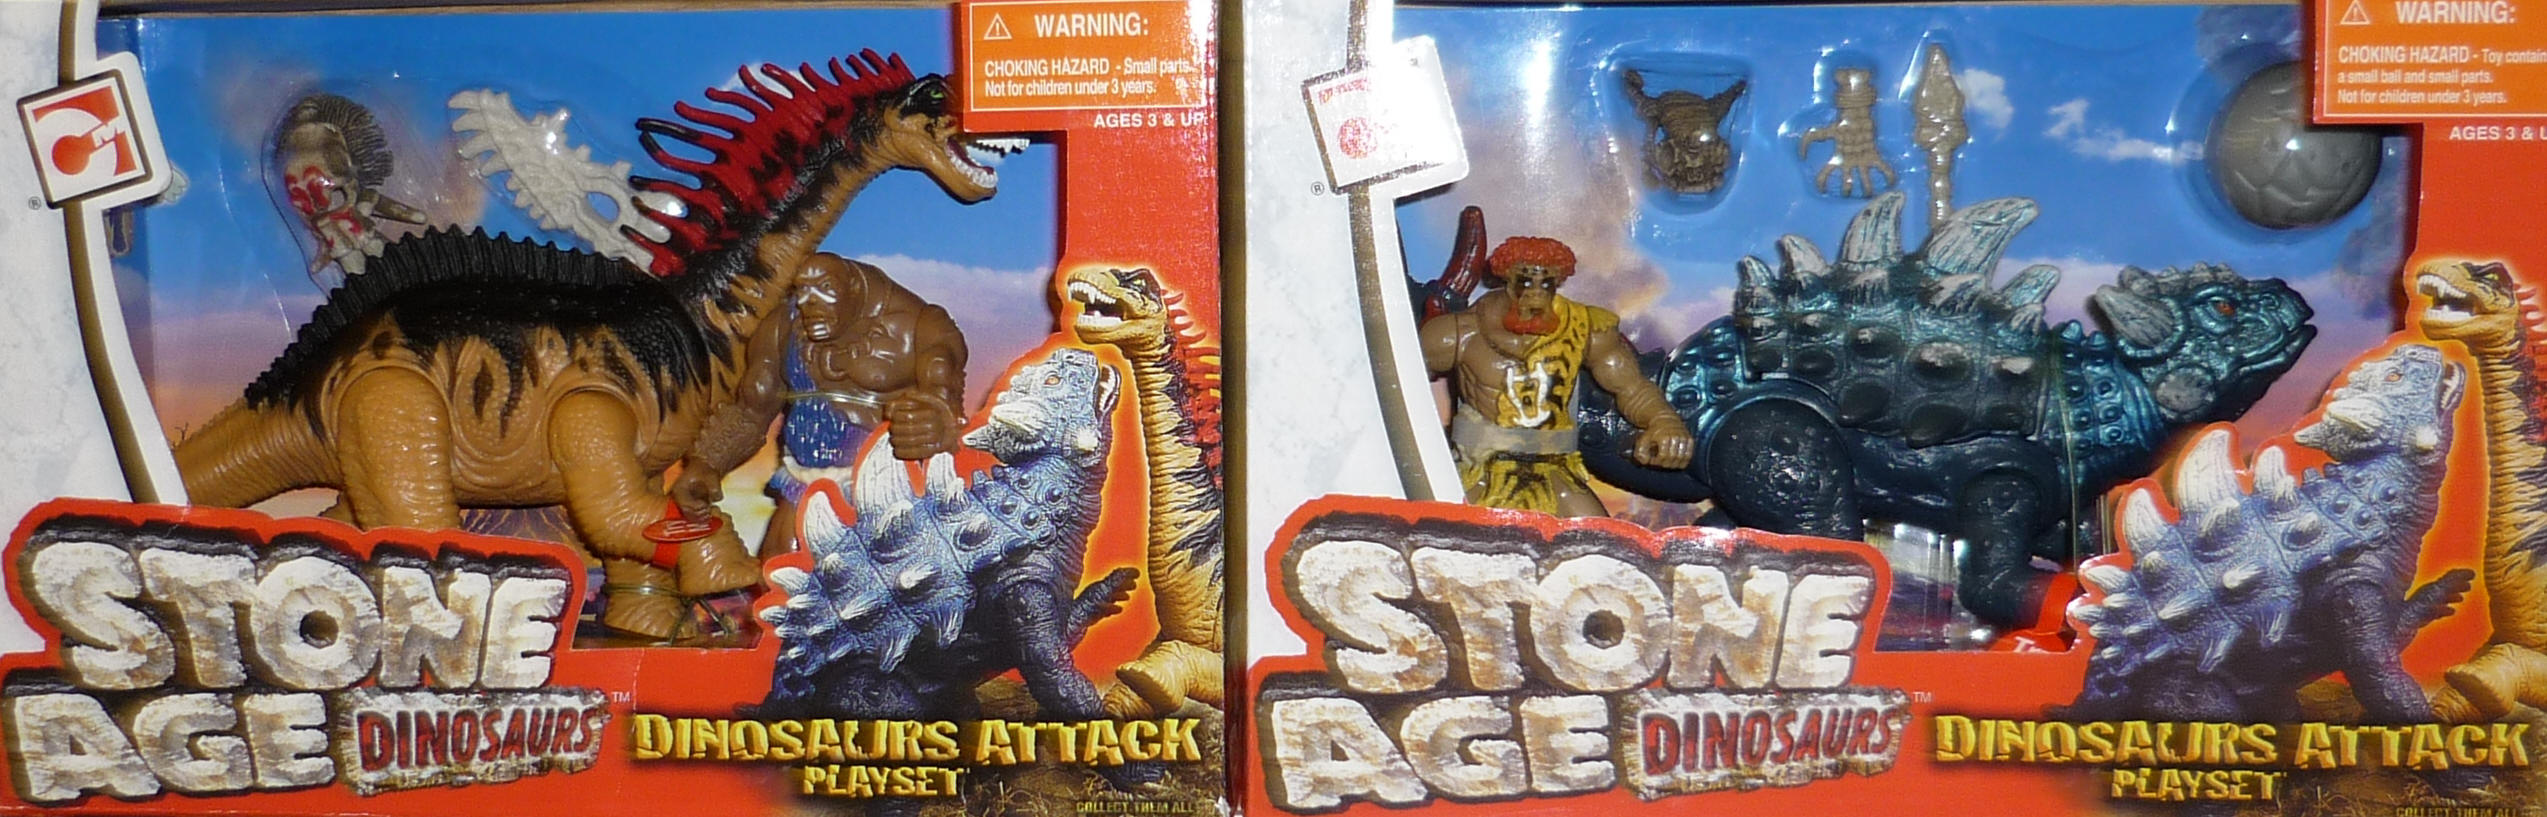 stone age dinosaurs toys